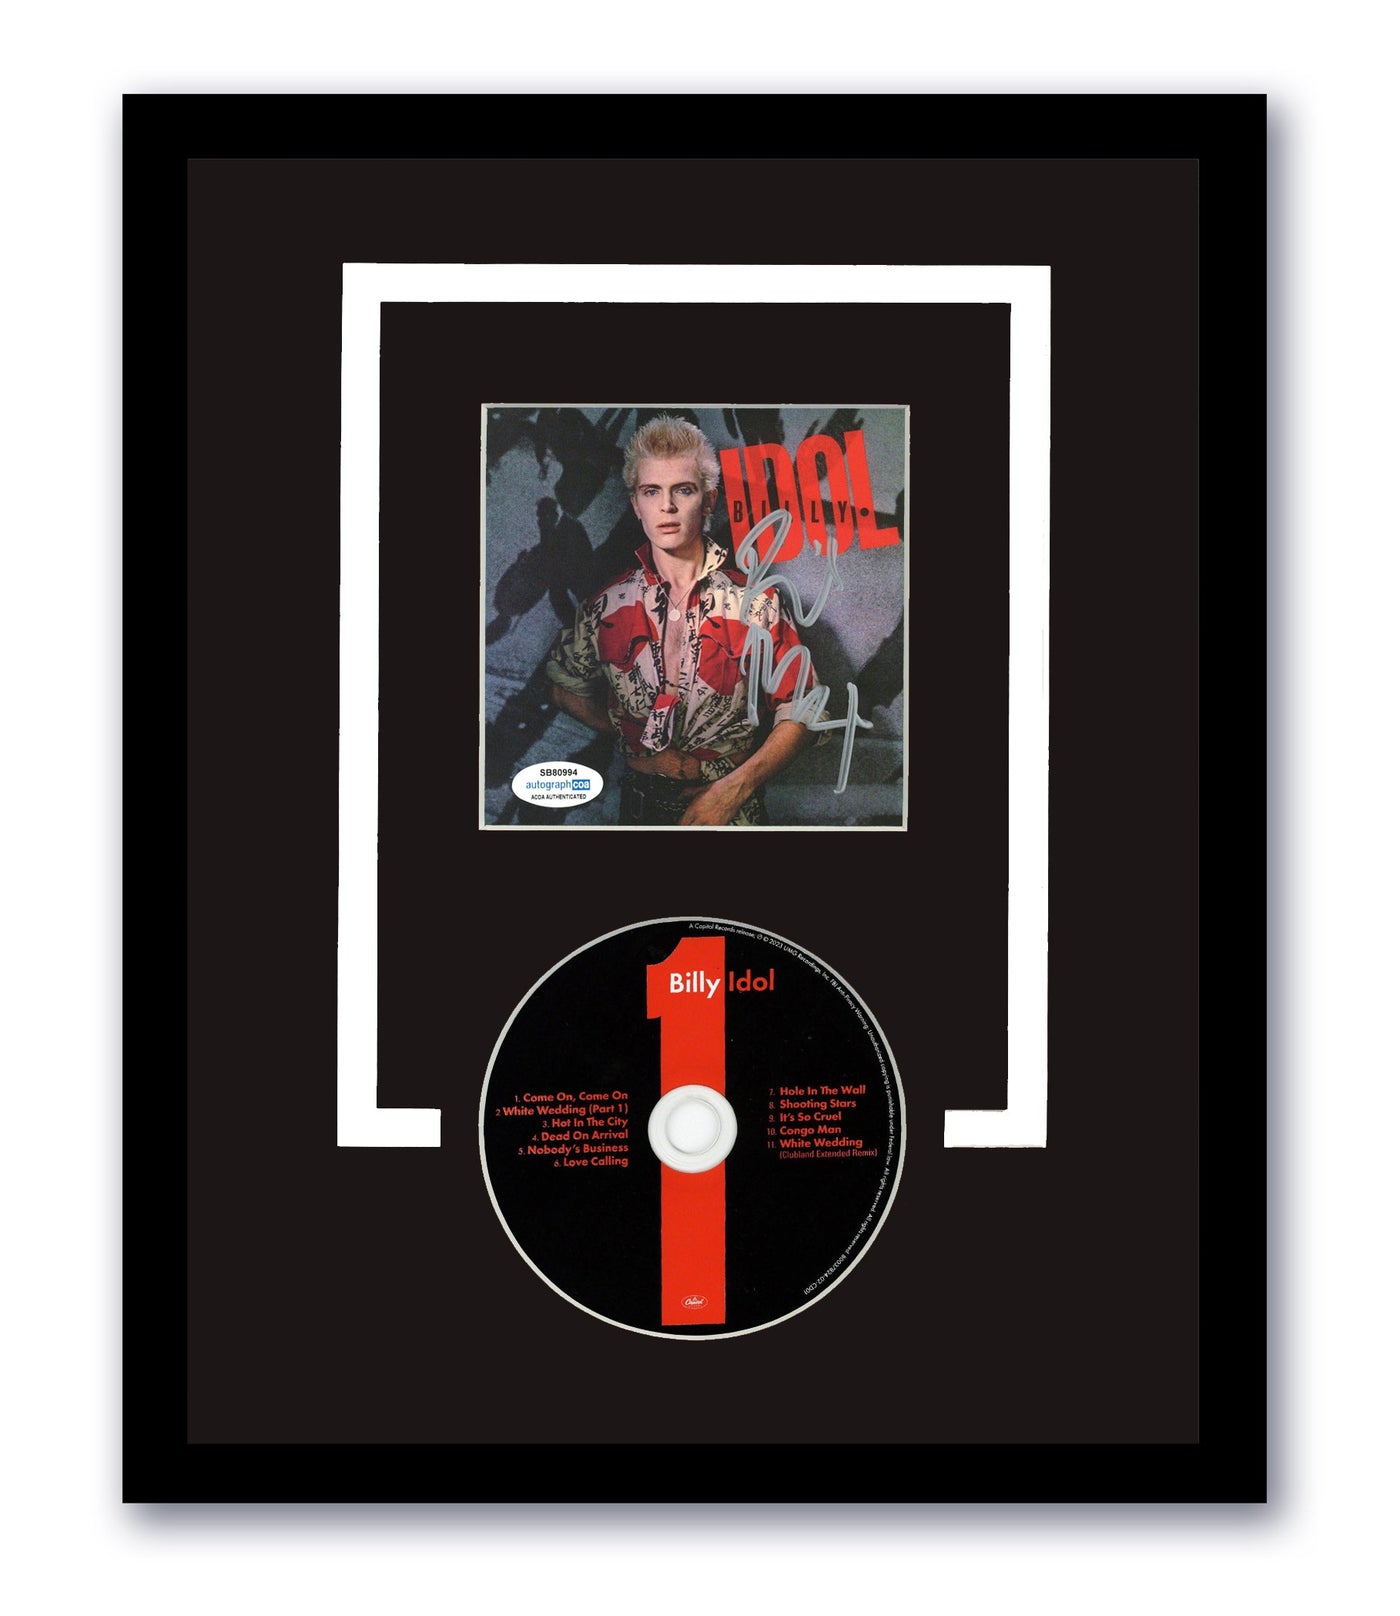 Billy Idol Signed CD 11x14 Framed White Wedding Autographed ACOA